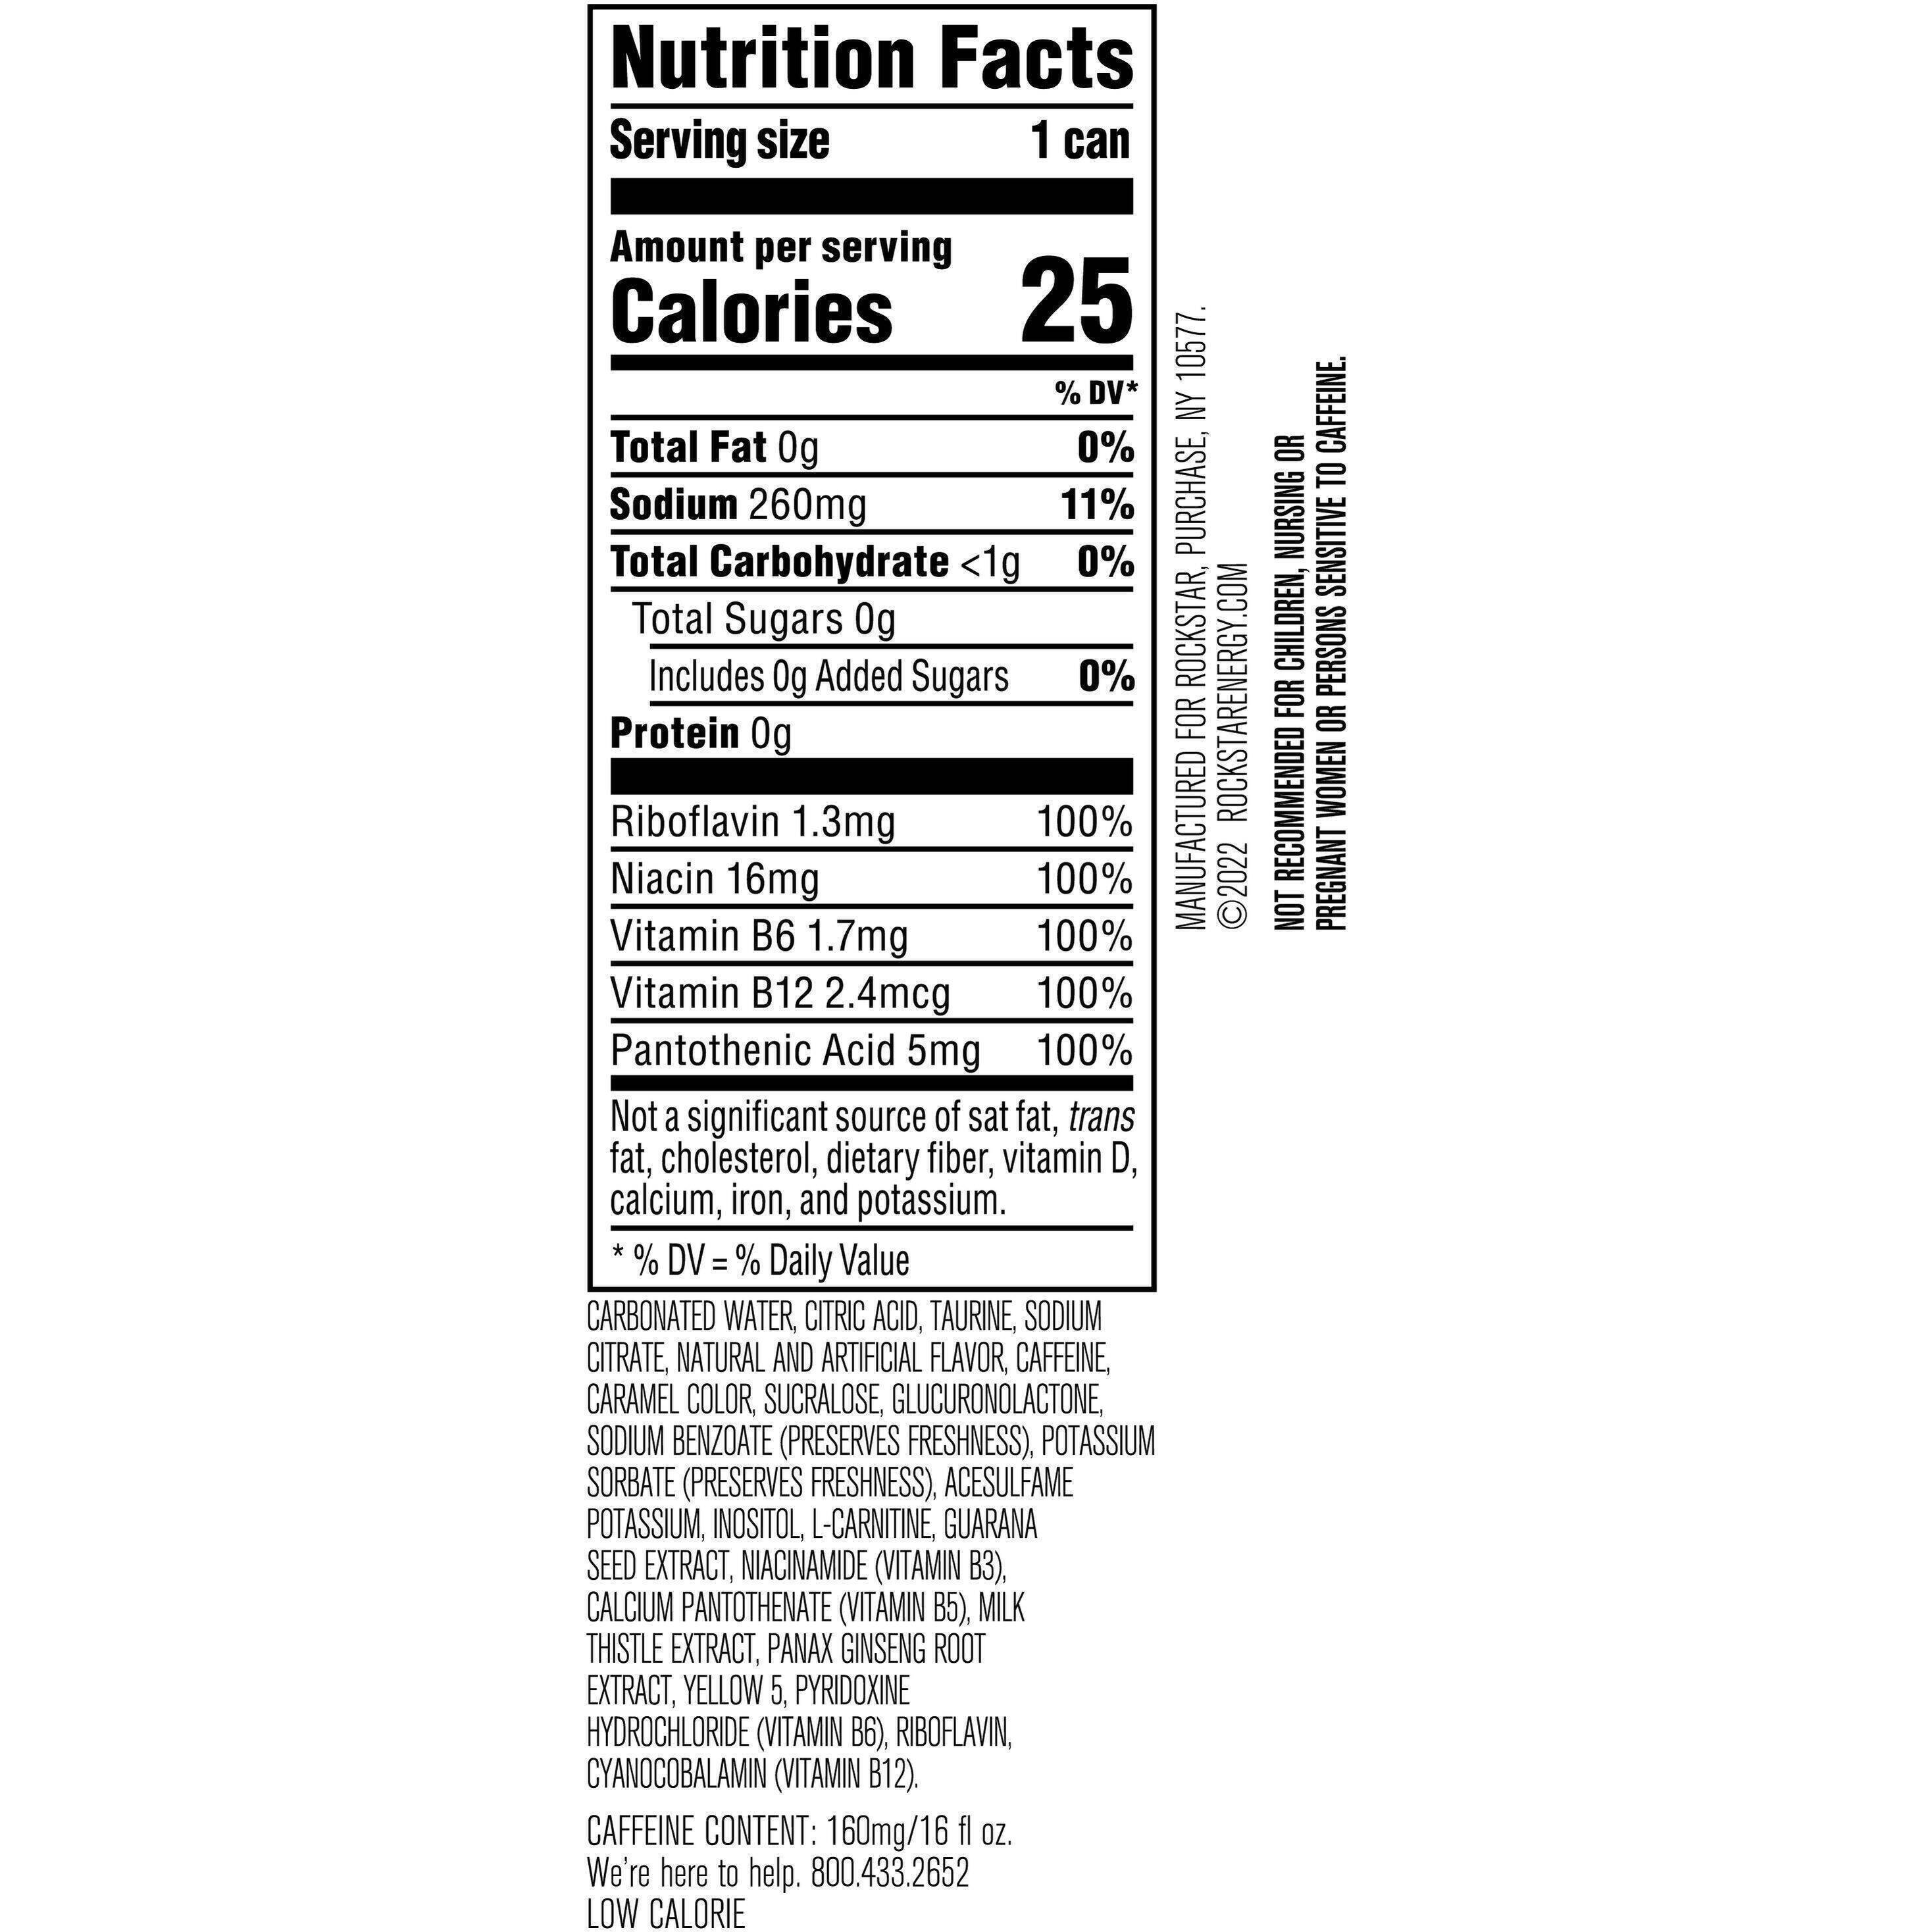 Image describing nutrition information for product Rockstar Energy Sugar Free